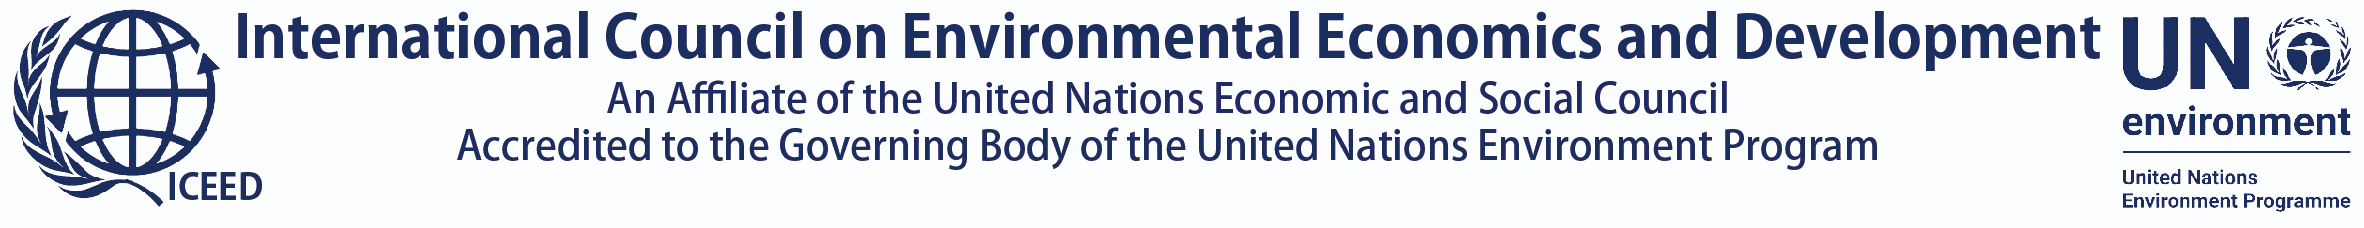 International Council on Environmental Economics and Development (ICEED)